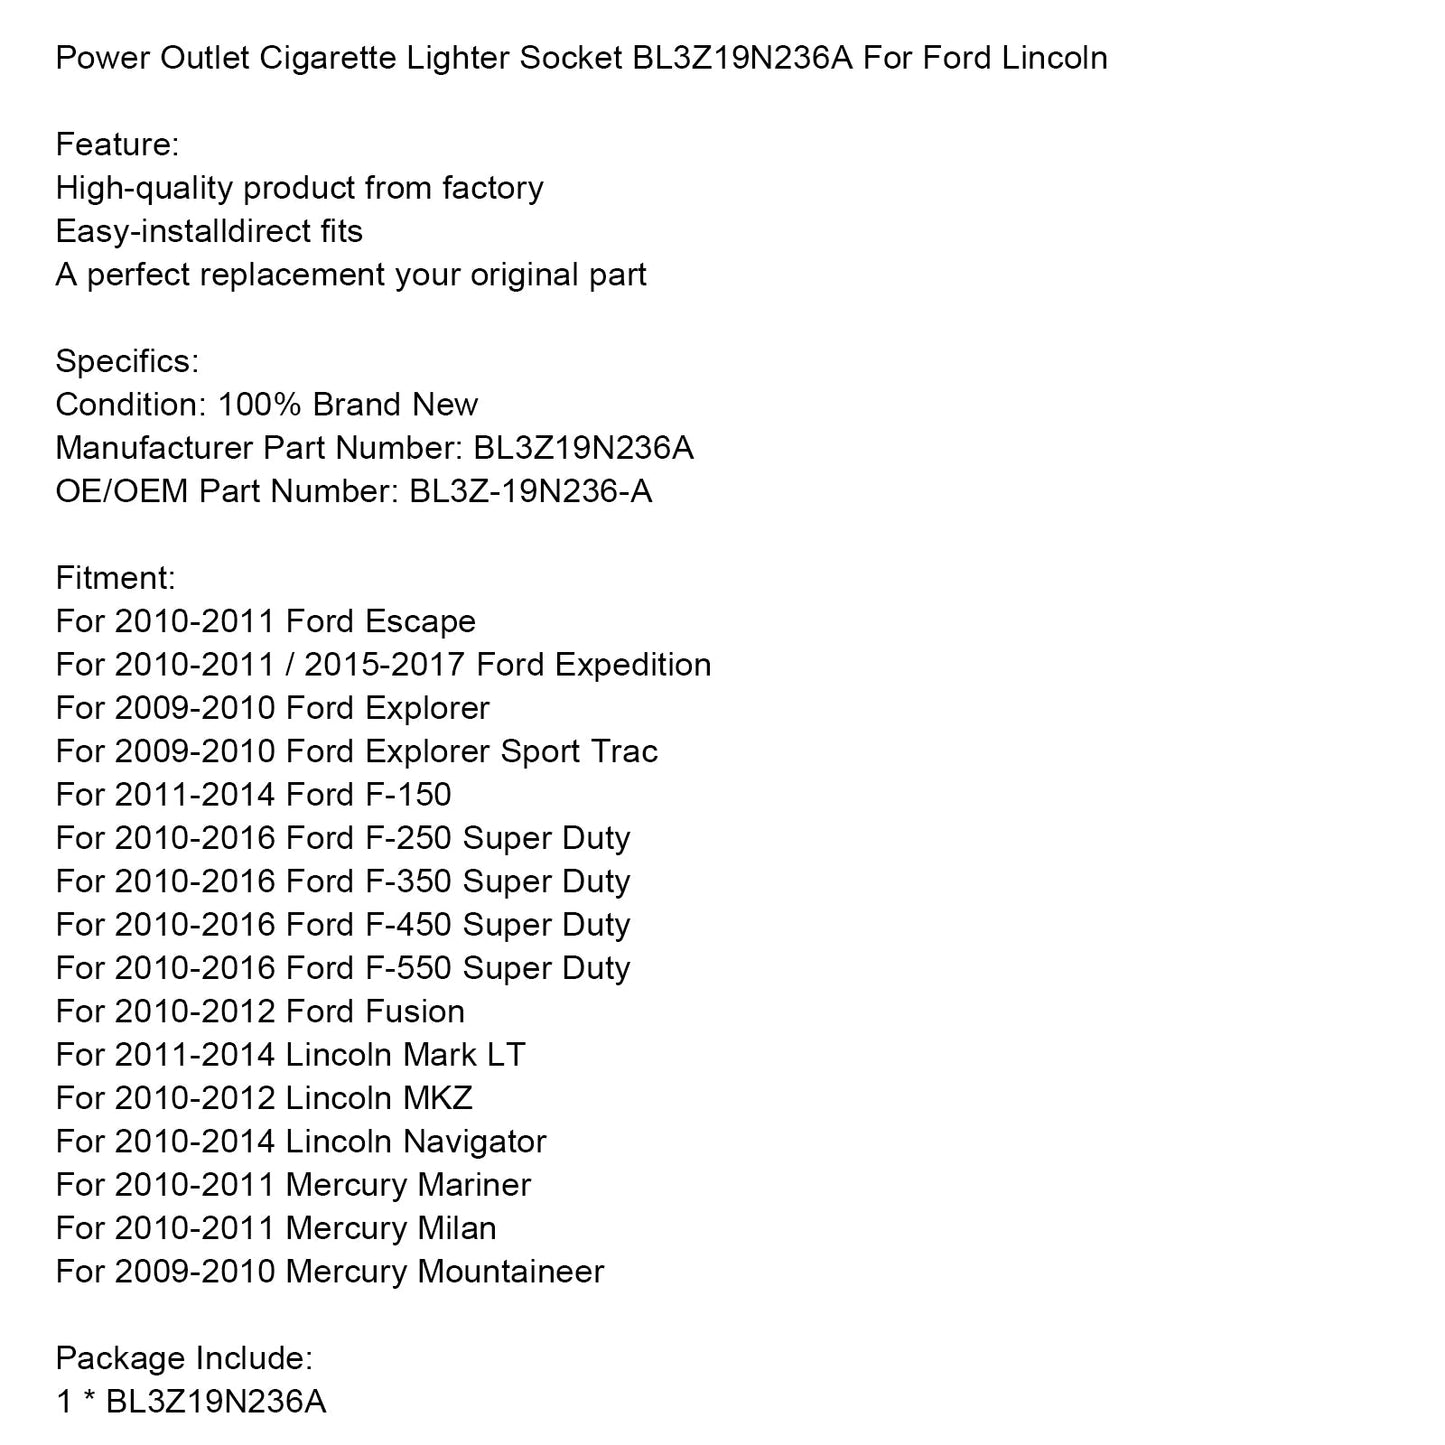 Ford Lincoln Power Outlet Cigarette Lighter Socket BL3Z19N236A